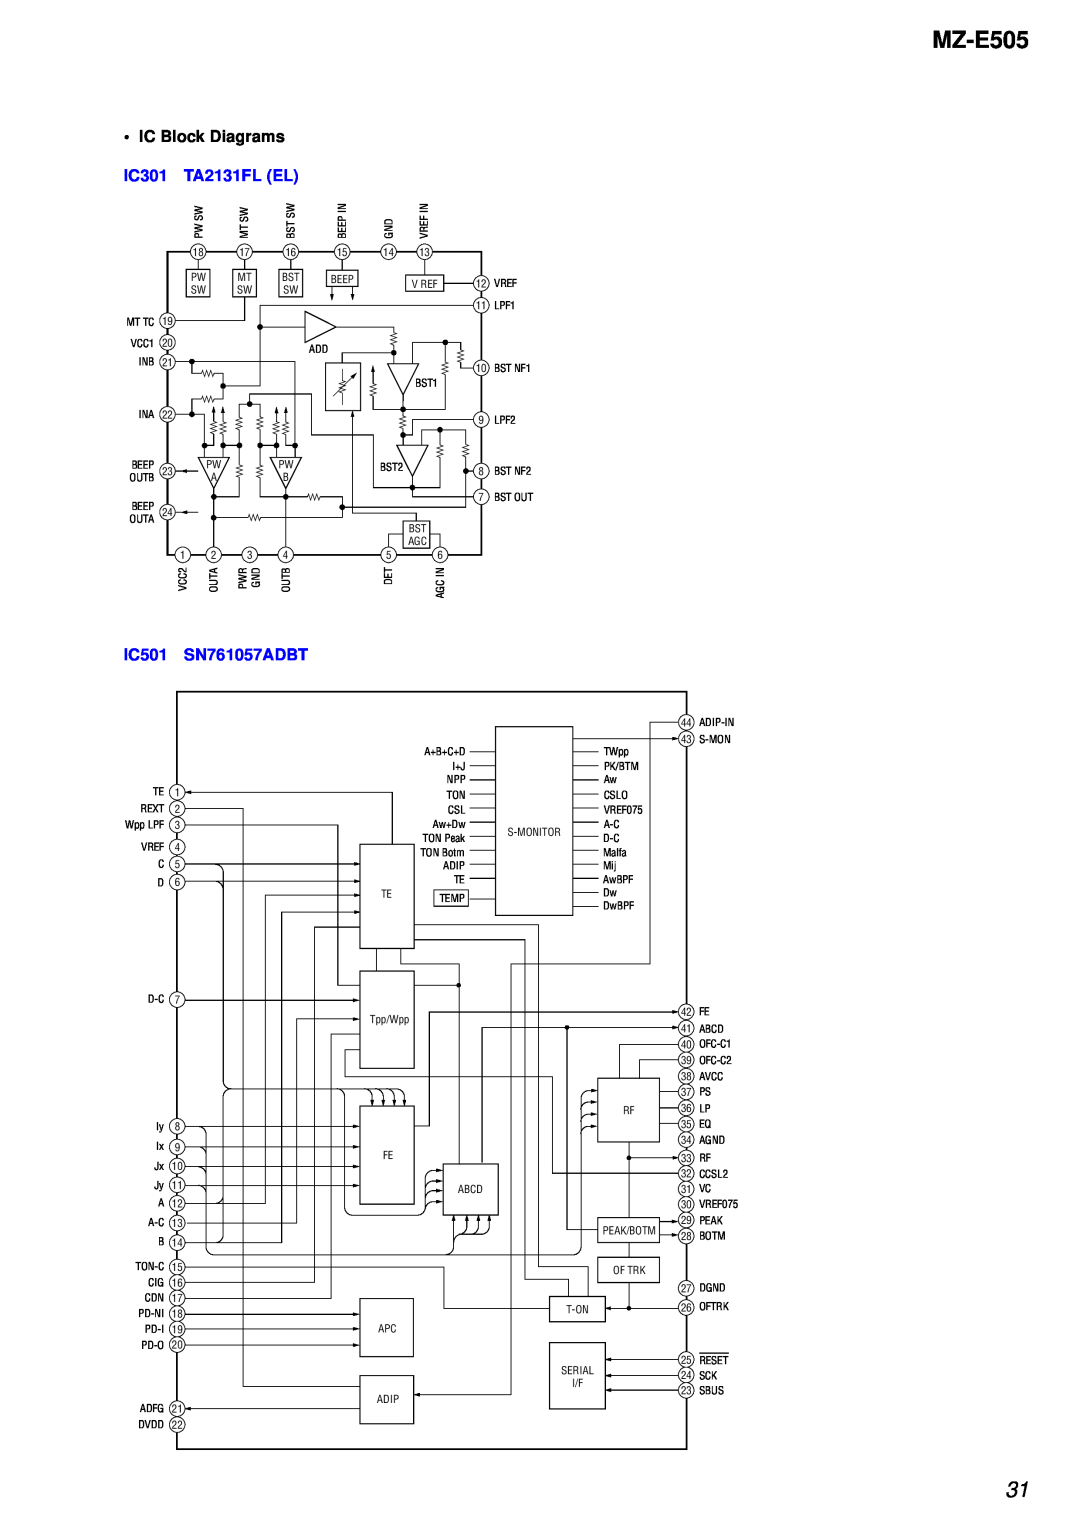 Sony MZ-E505 service manual IC Block Diagrams, IC301, TA2131FL EL, IC501, SN761057ADBT 